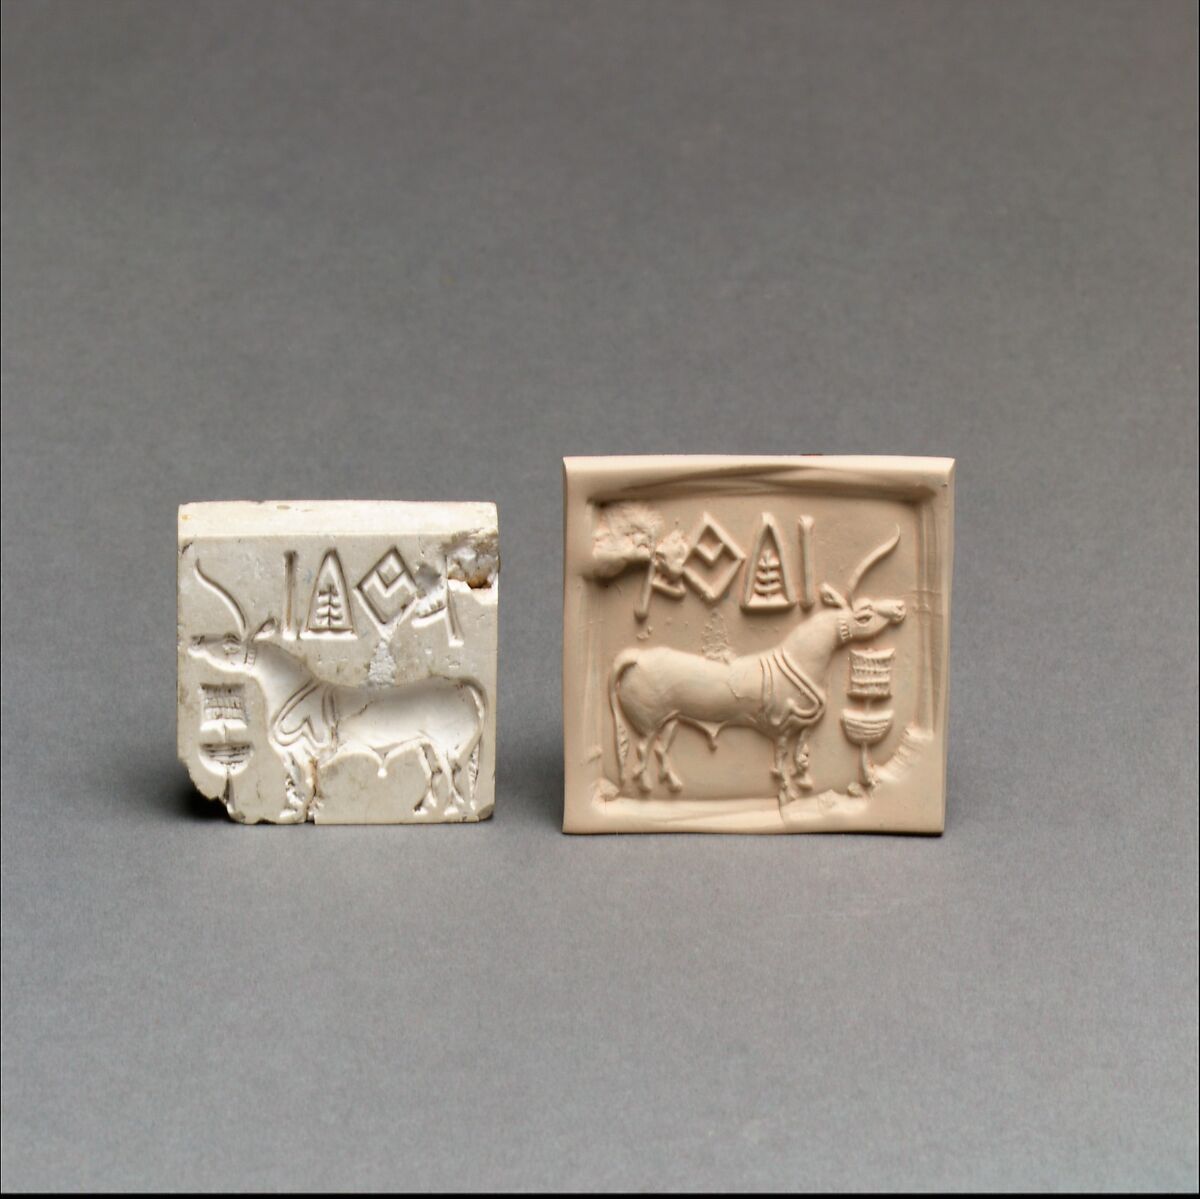 Stamp seal and modern impression: unicorn and incense burner (?)